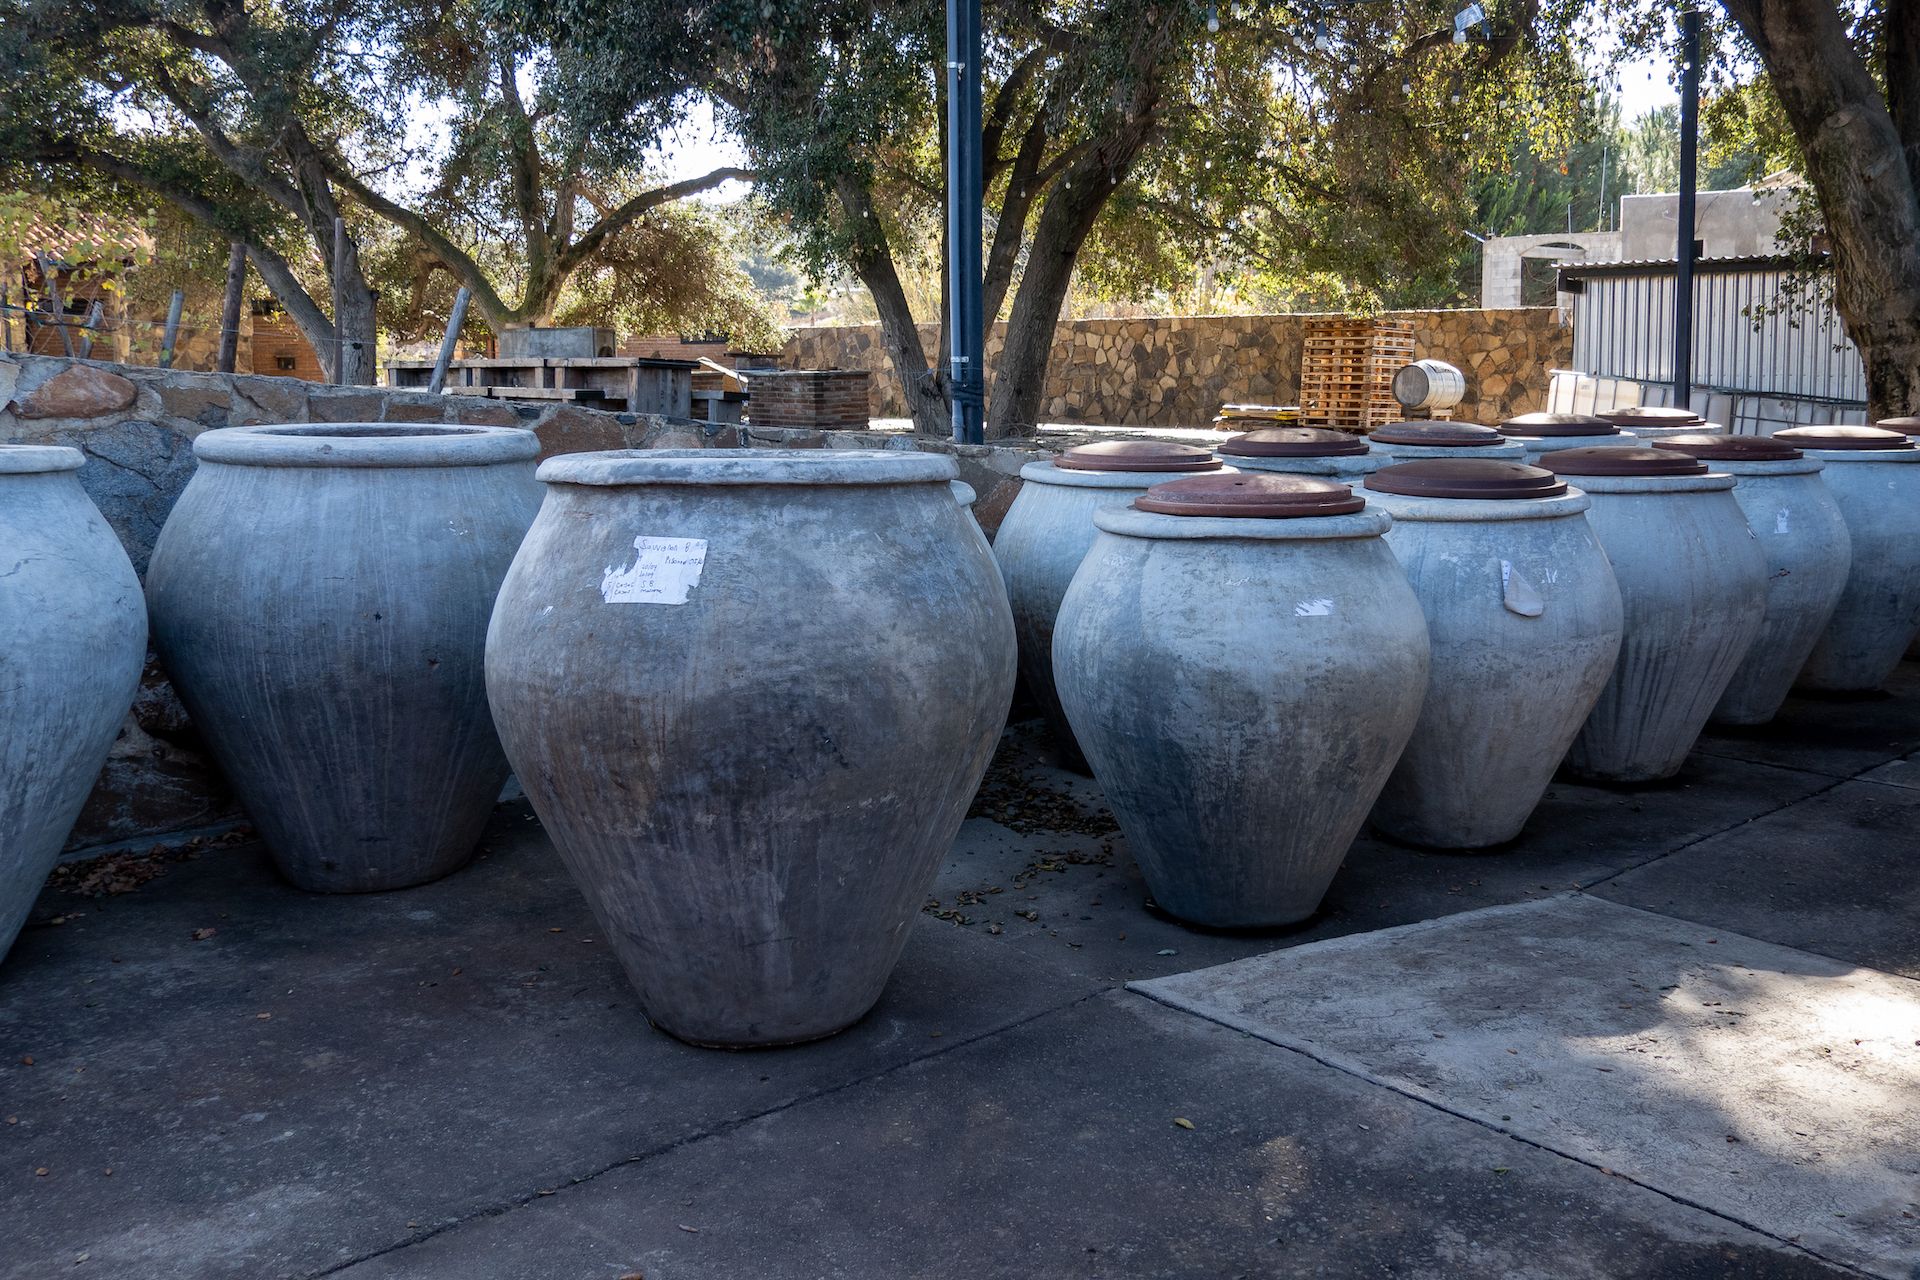 Amphora pots at the winery